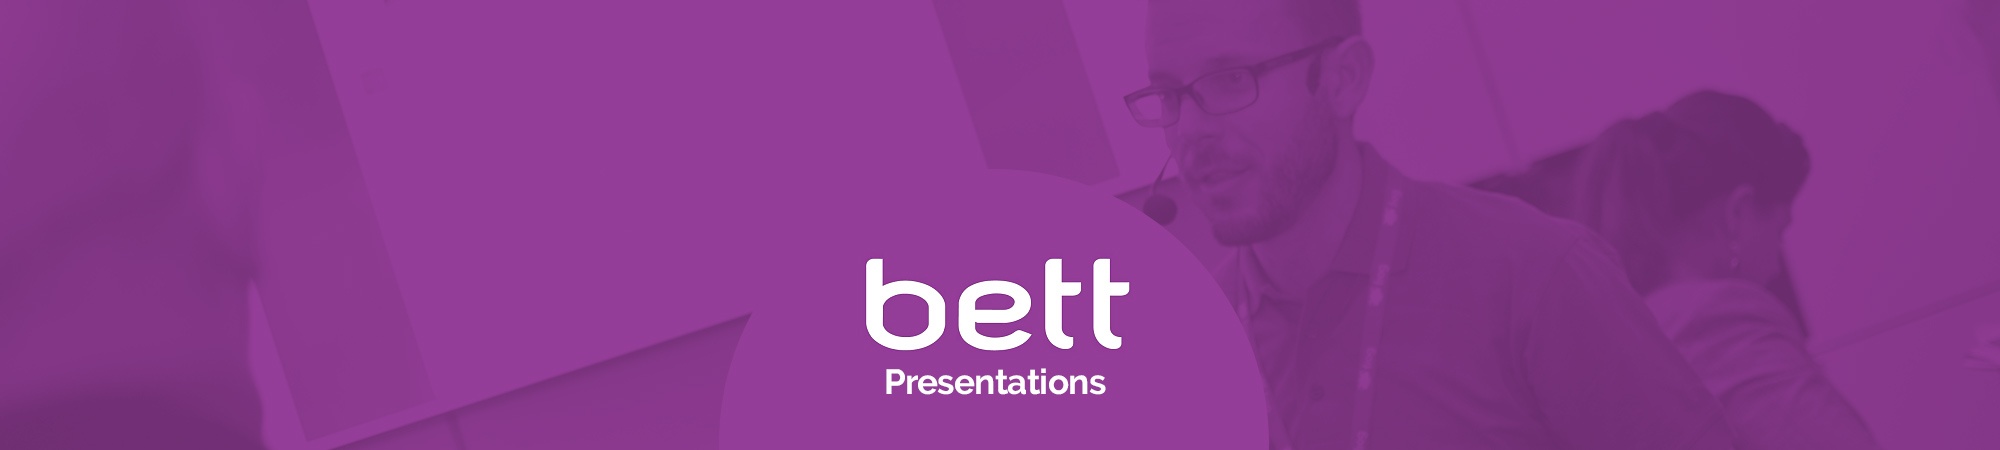 Blog----Thumbnail-BETT-Presentations.jpg